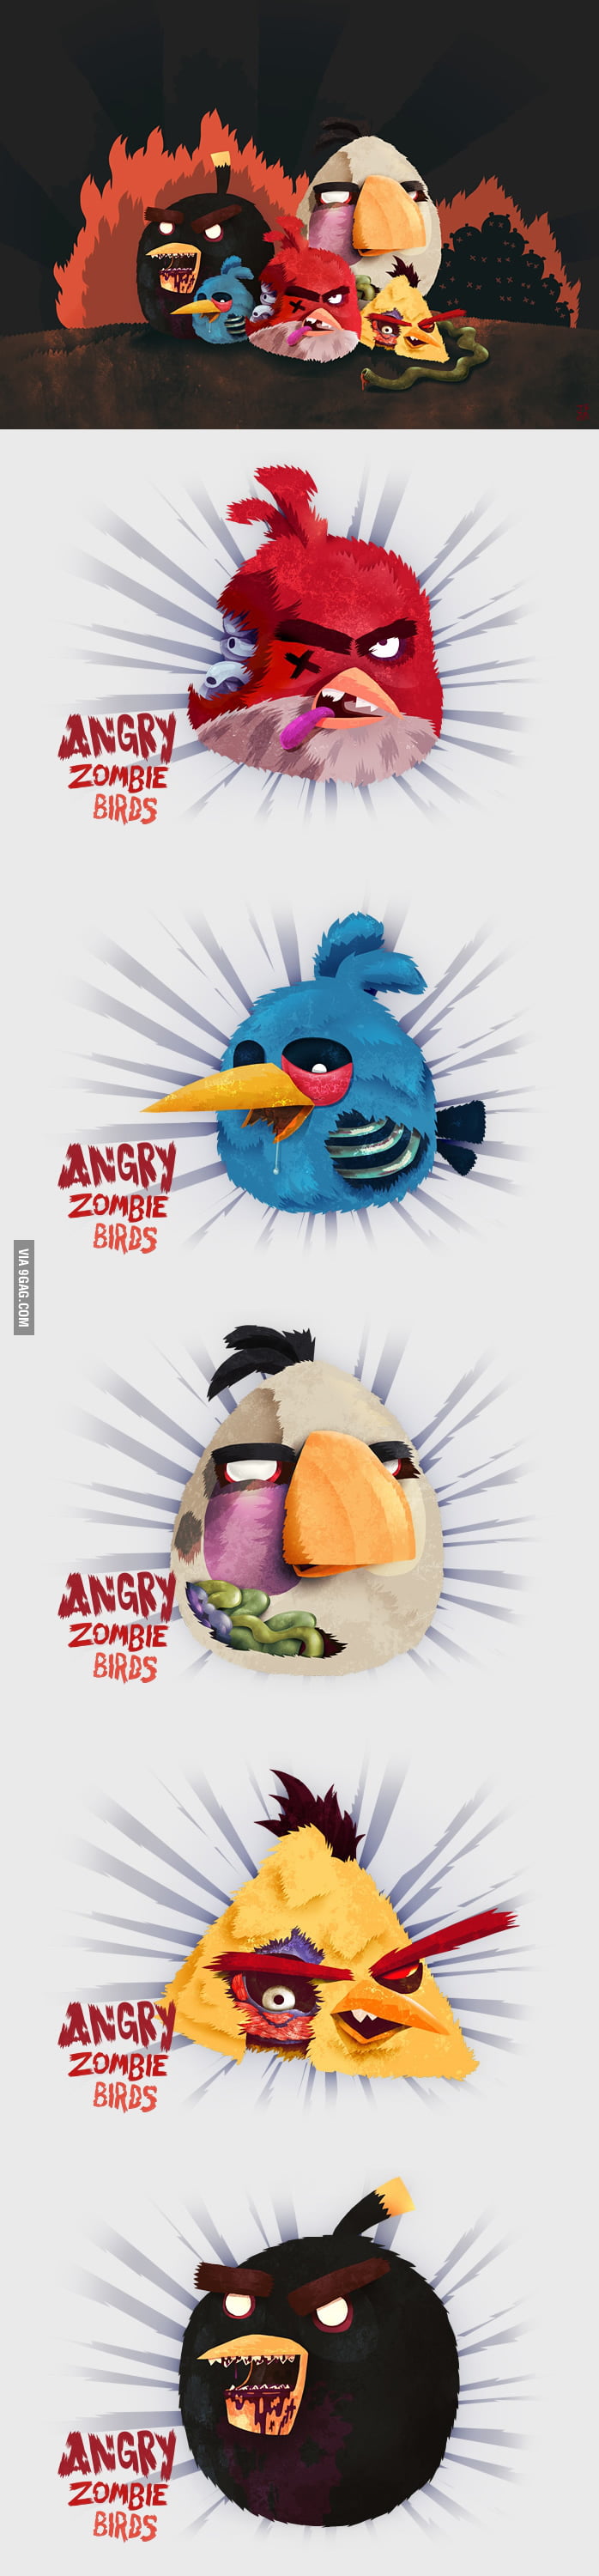 Angry Zombie Birds 9gag